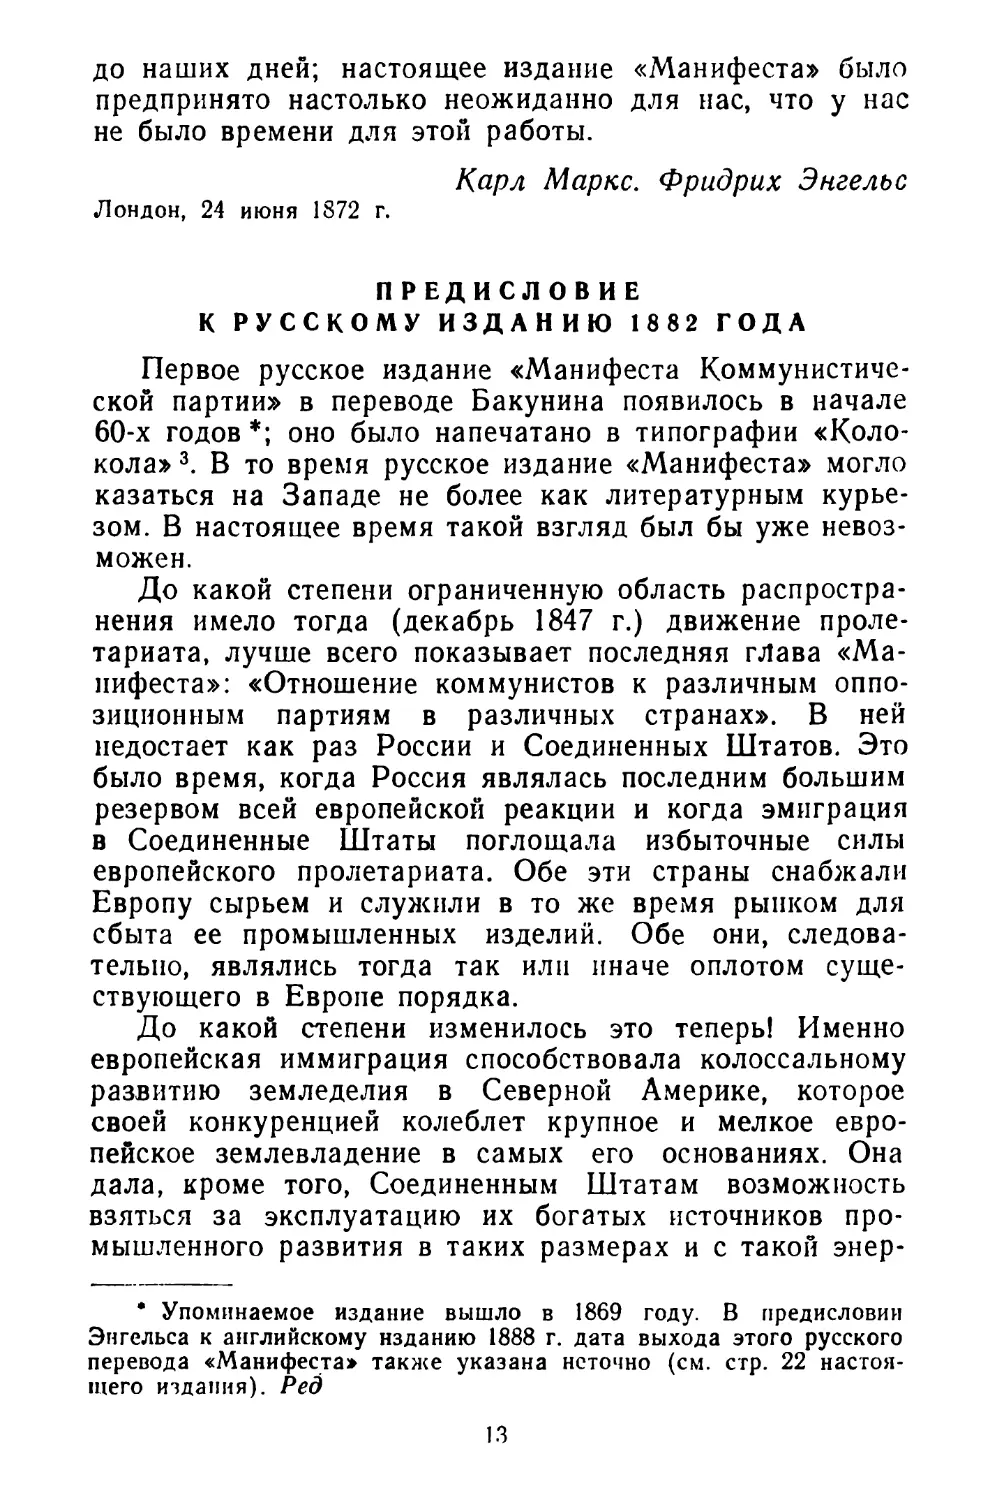 Предисловие к русскому изданию 1882 года